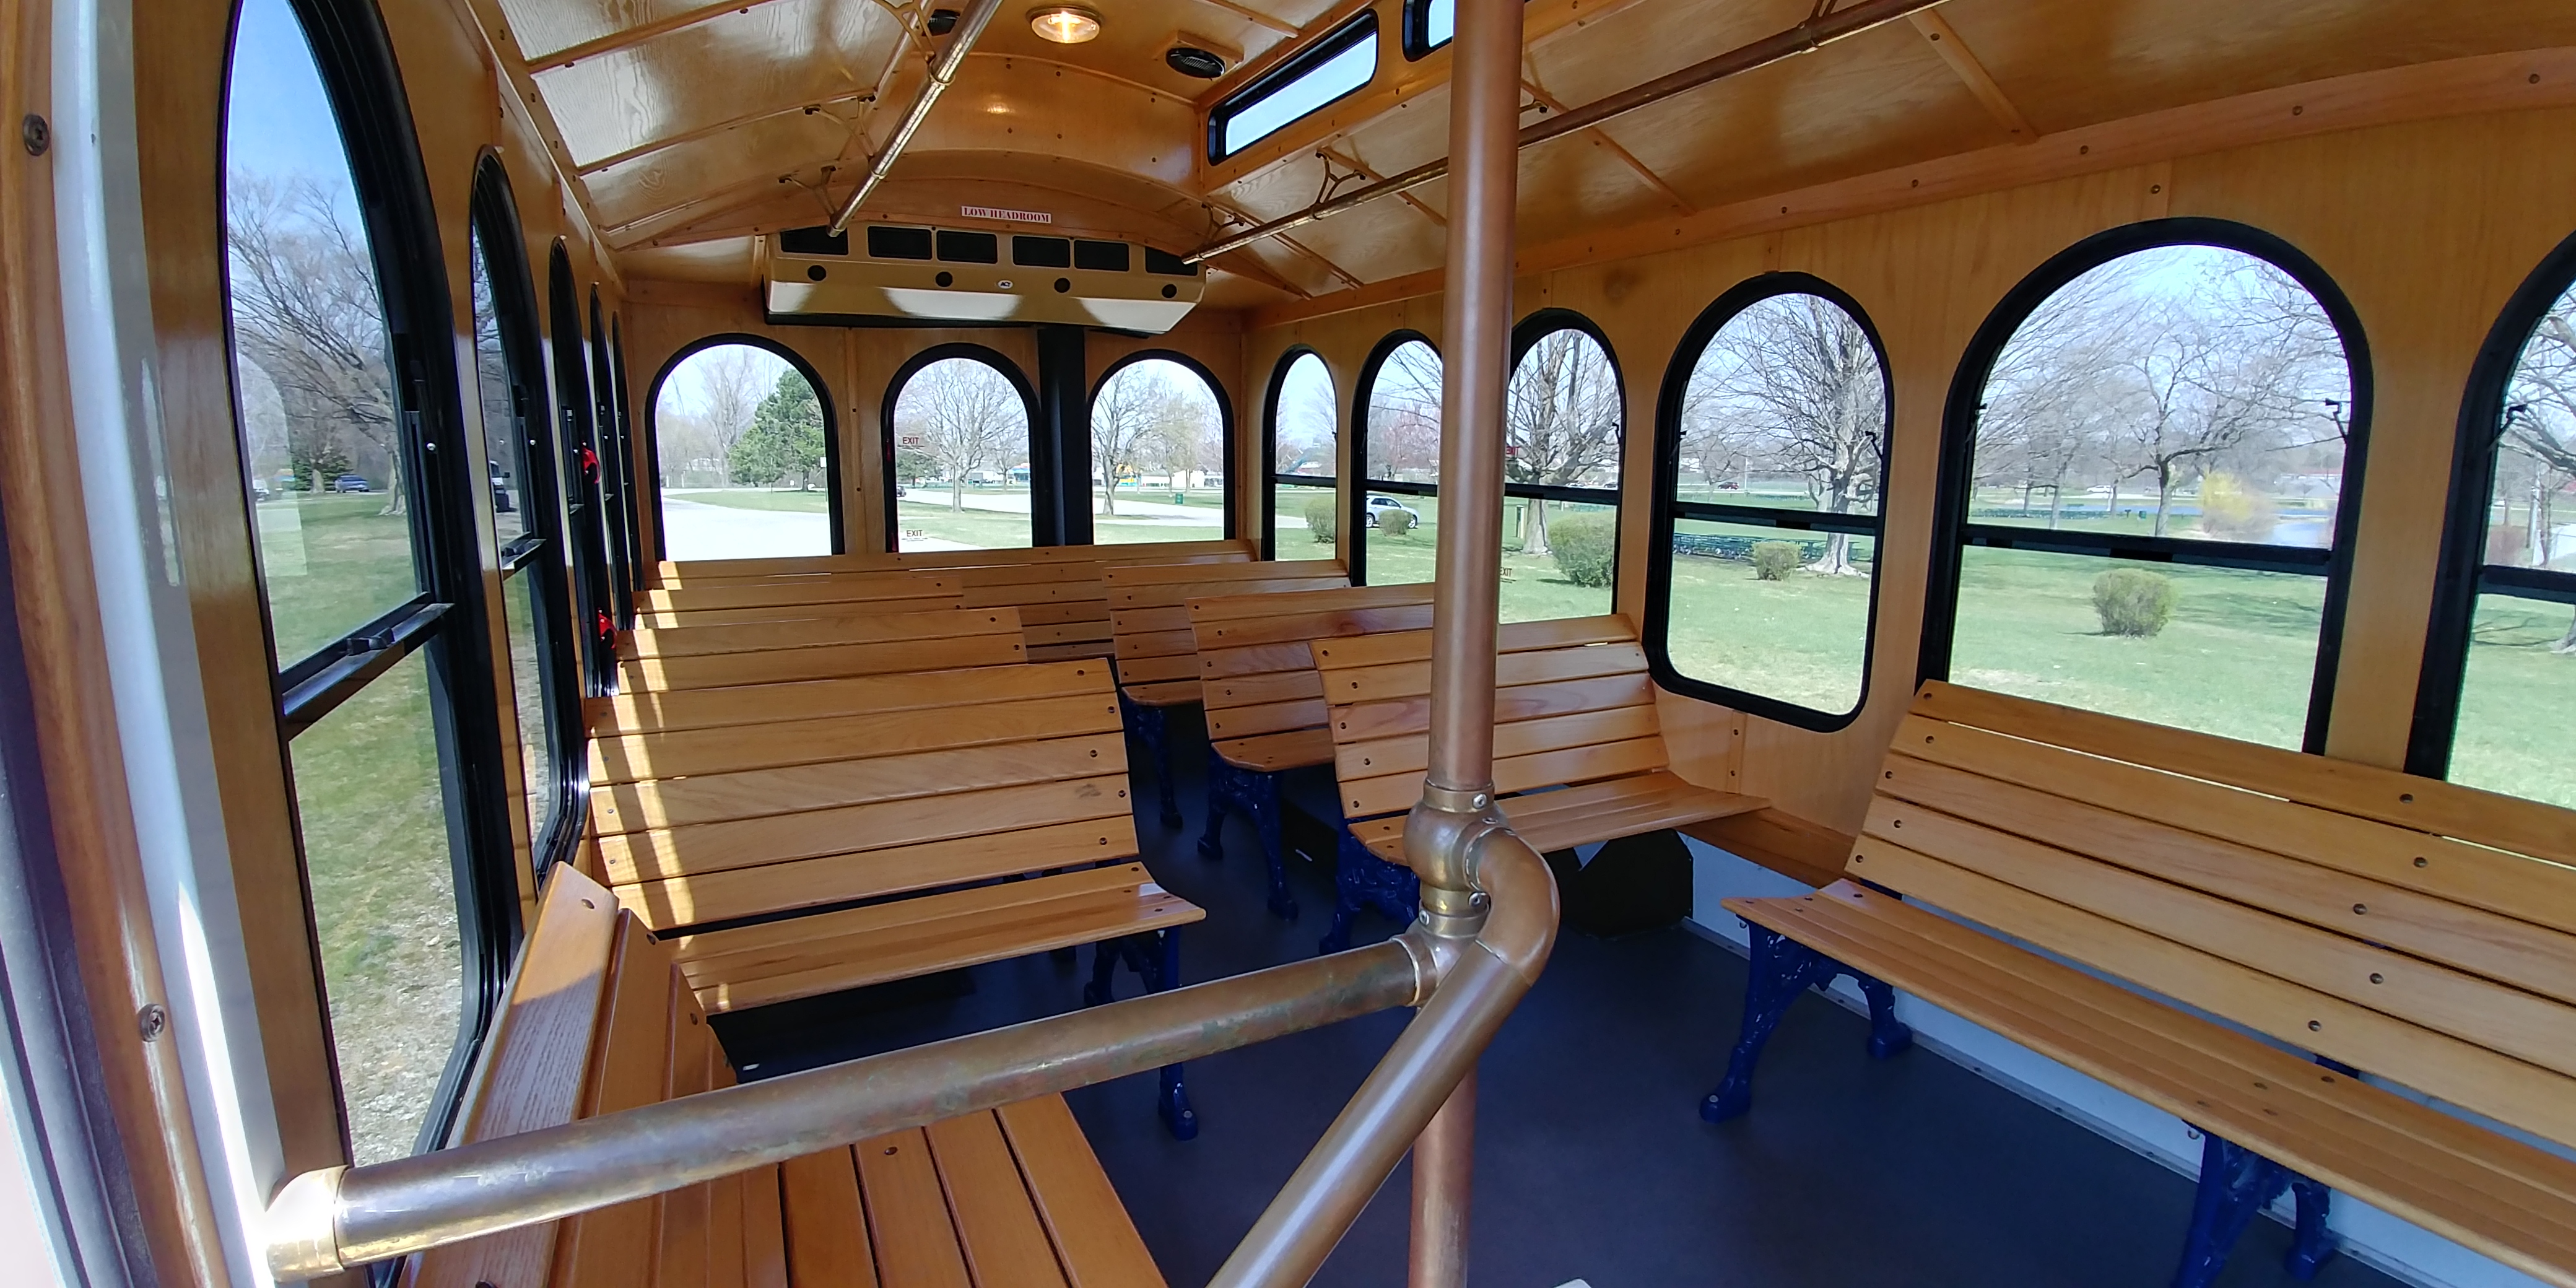 24 Passenger Trolley Interior 1